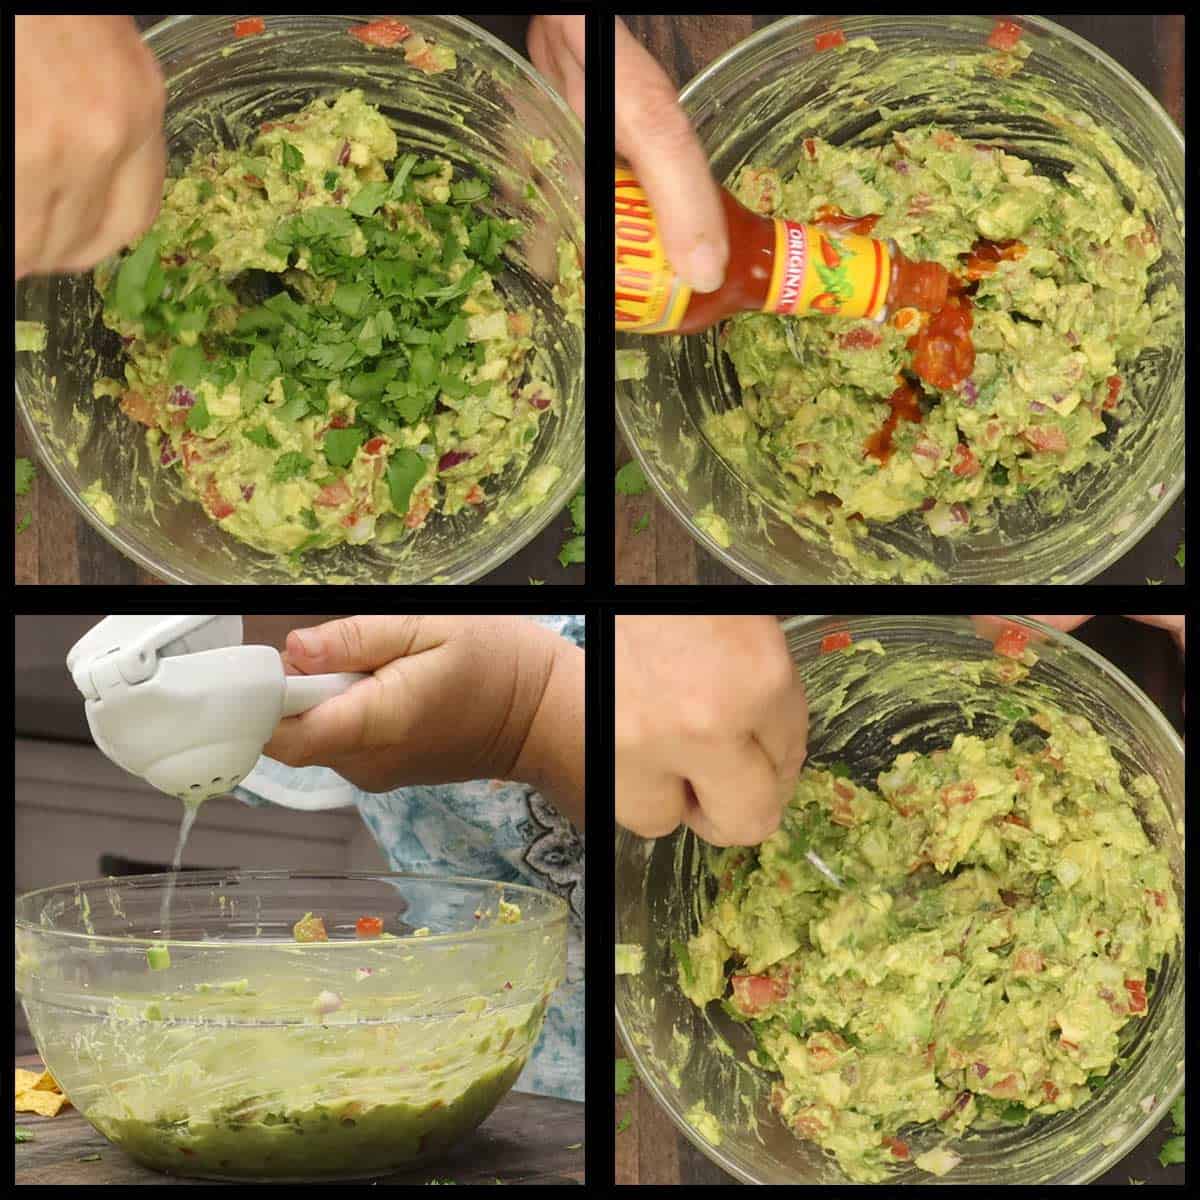 adding cilantro, hot sauce, and extra lime to homemade guacamole.